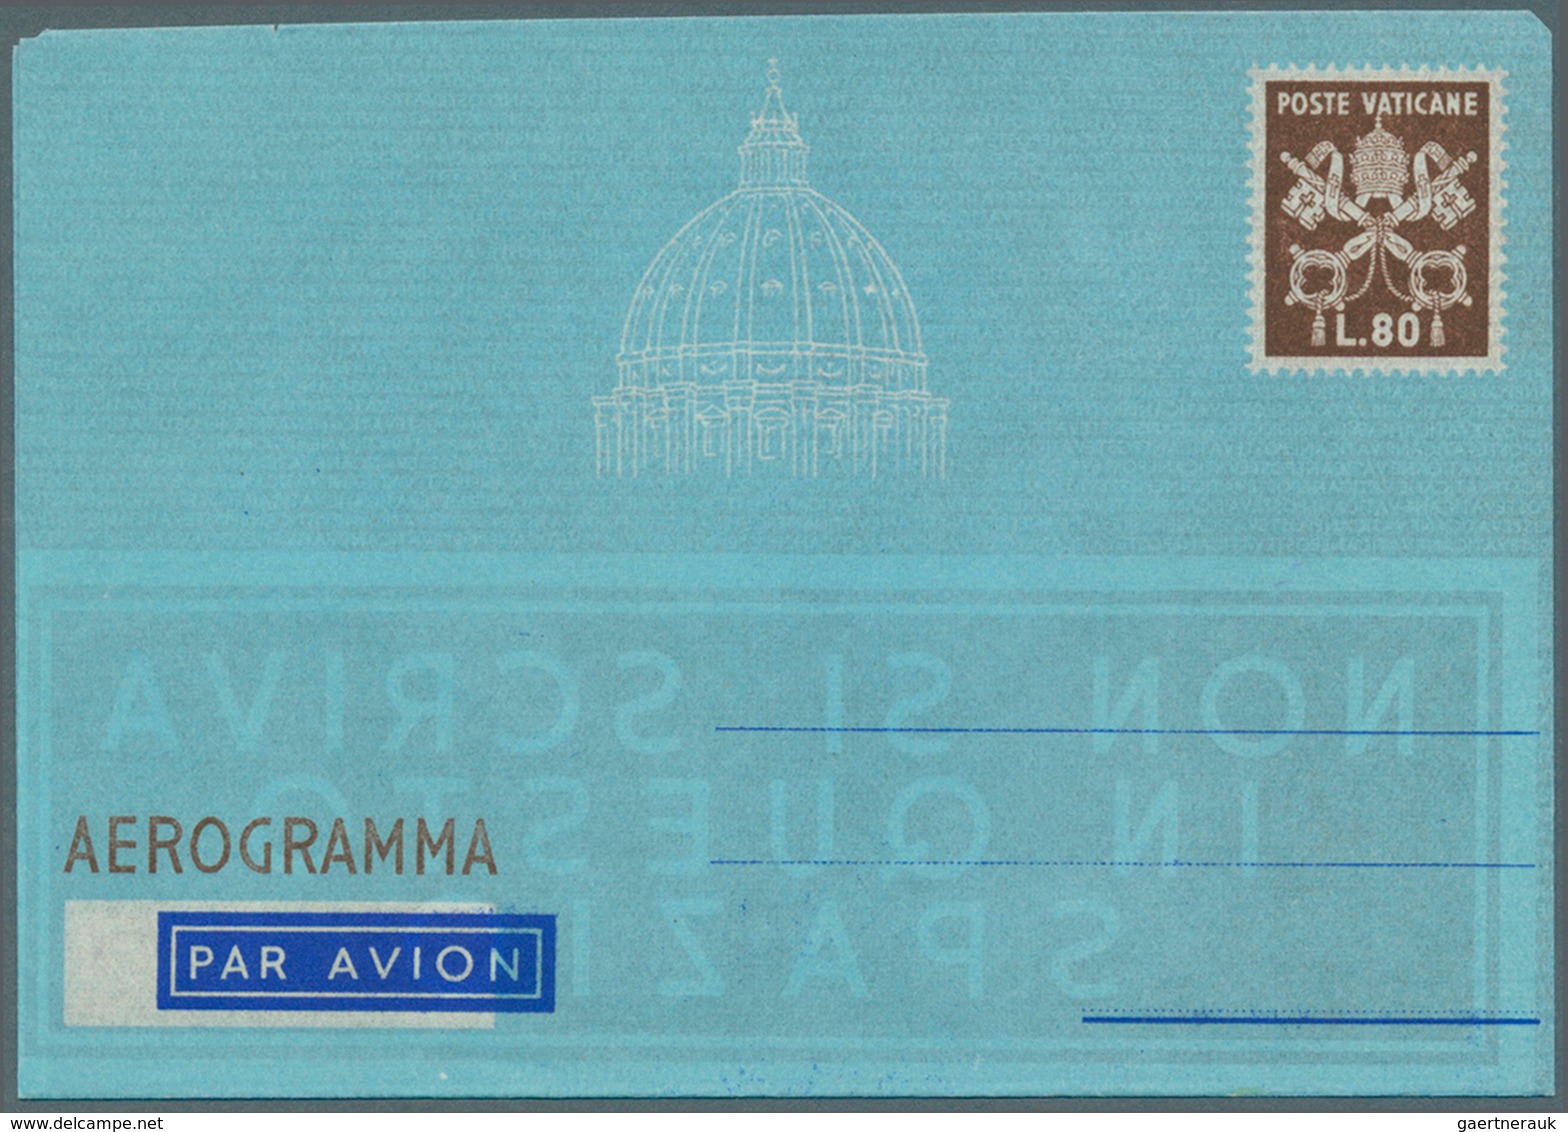 Vatikan - Ganzsachen: 1951, Aerogramme Of The Vatican L. 80 "AEROGRAMMA" Brown, Unused. Unlisted Var - Enteros Postales